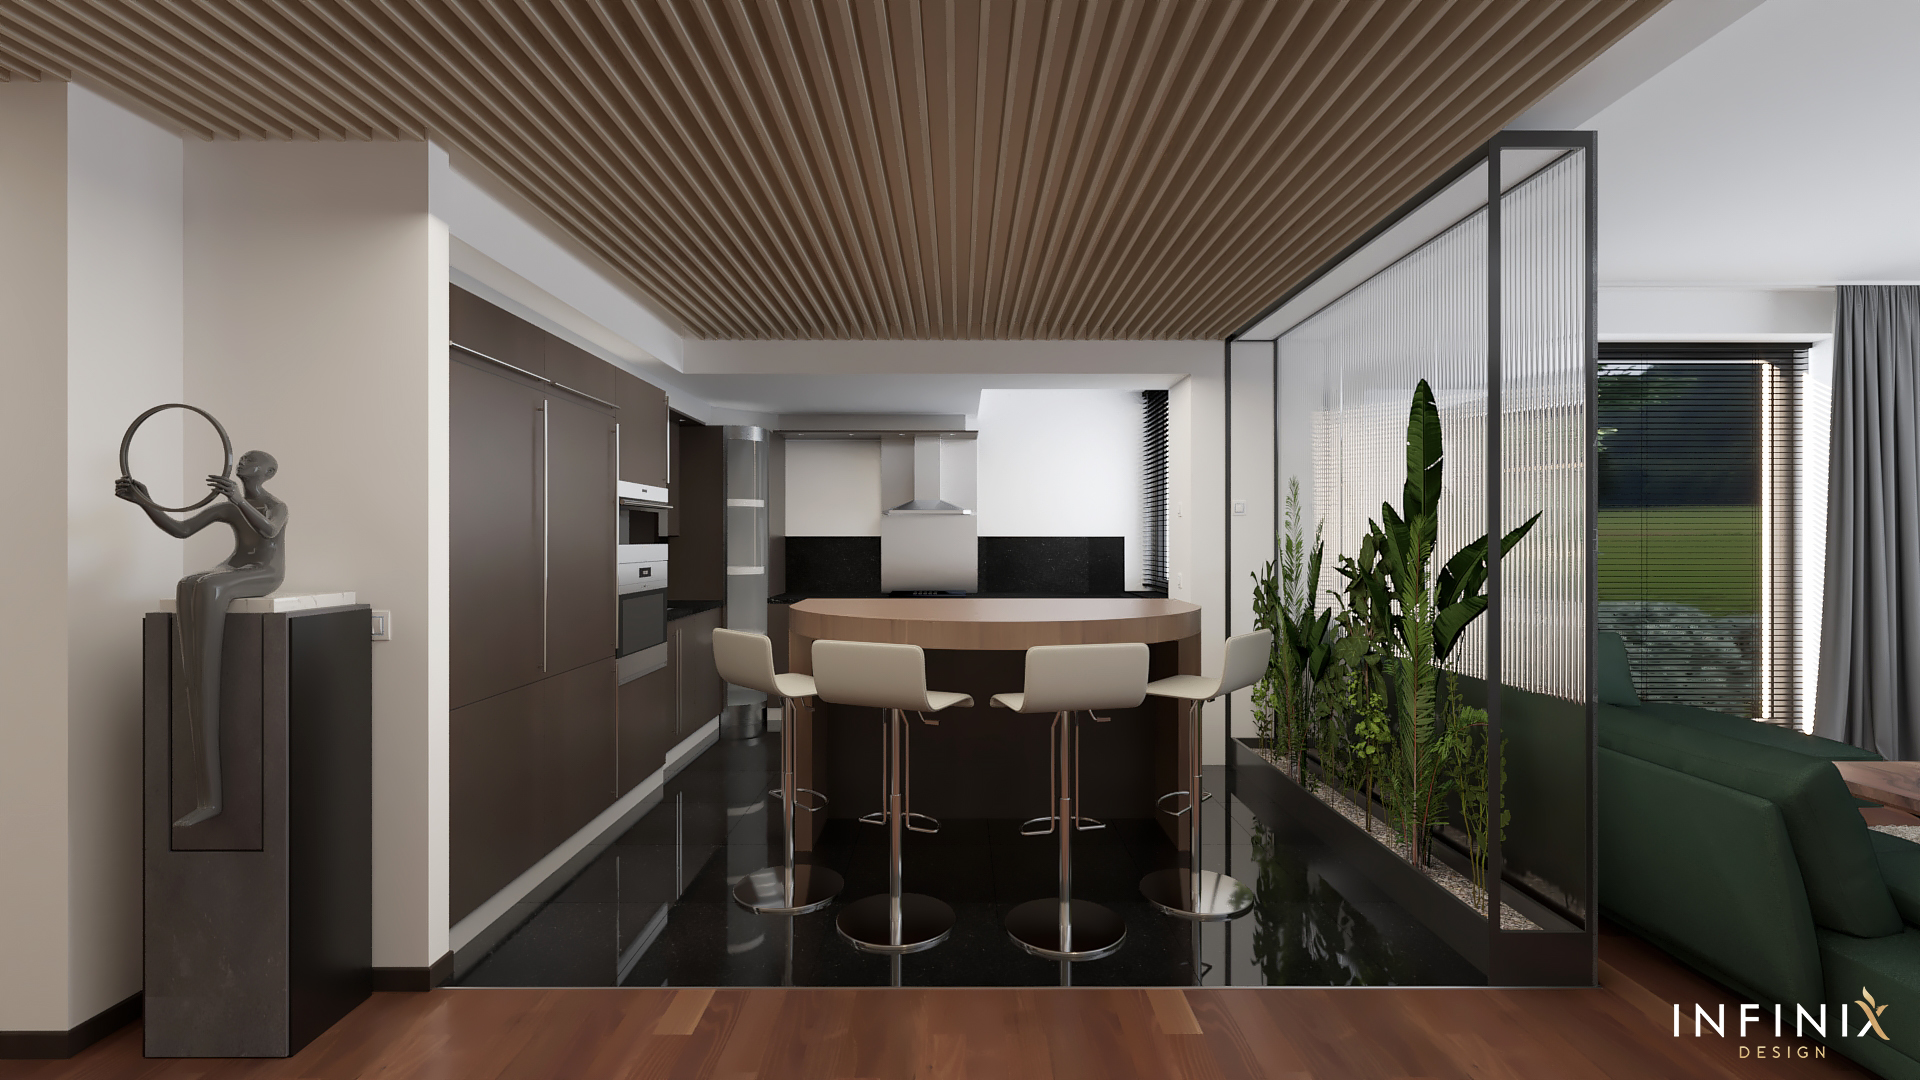 019.03_Infinix_design_interior_apartment conversion office - openspace